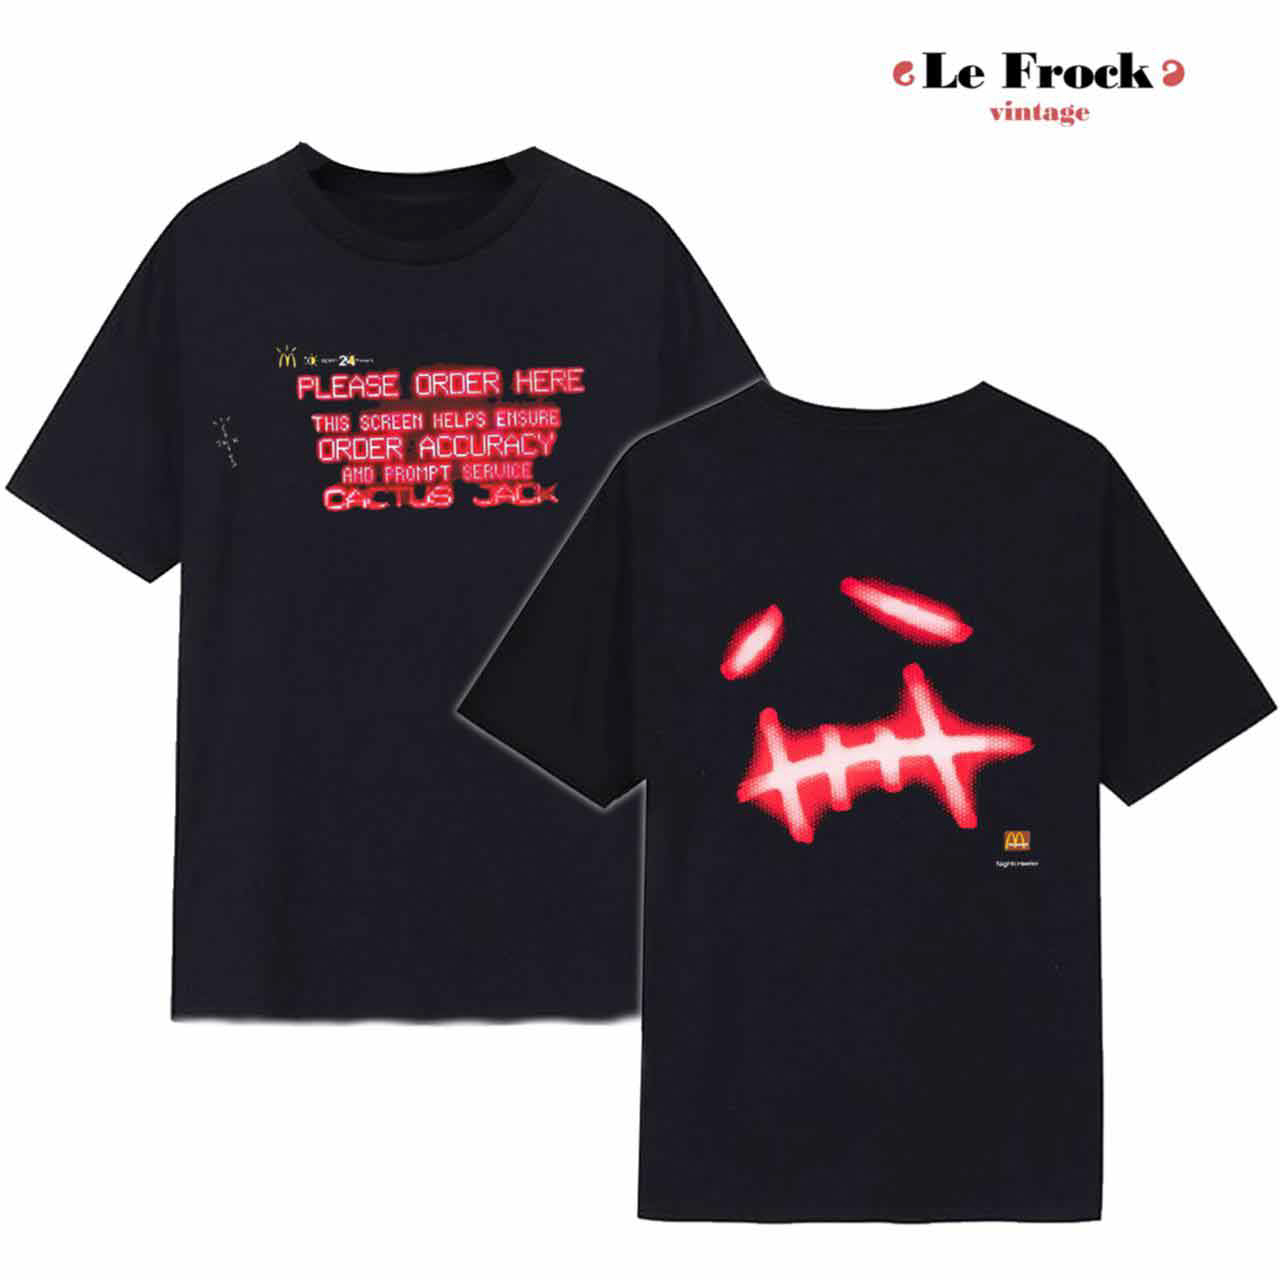 Travis Scott x Mcdonald’s Order Here T-shirt